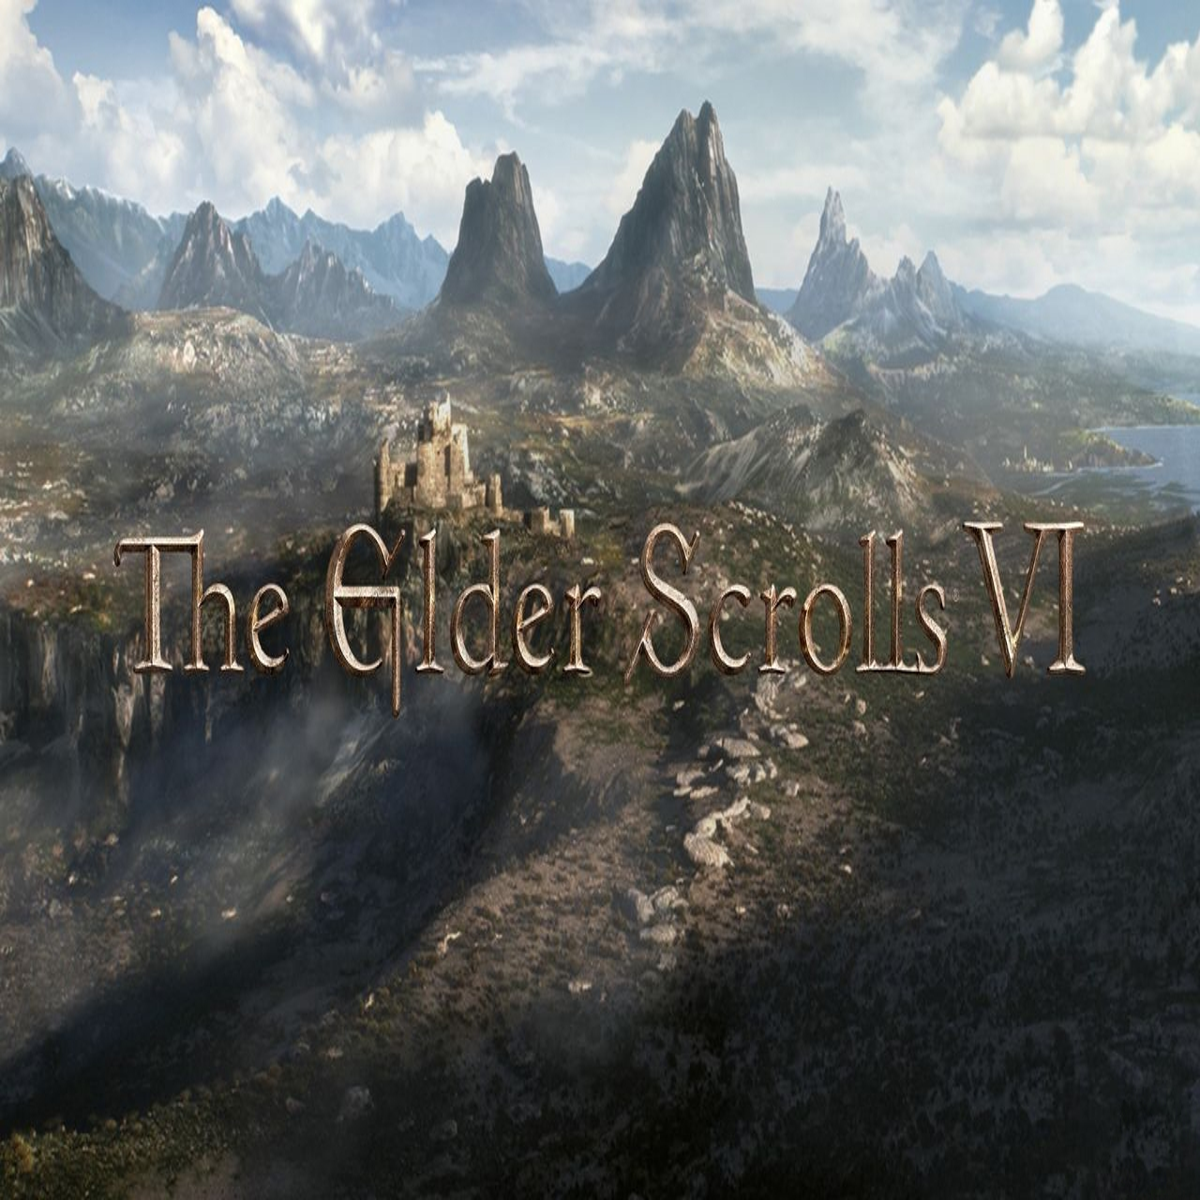 Phil Spencer reconfirma exclusividade de The Elder Scrolls VI